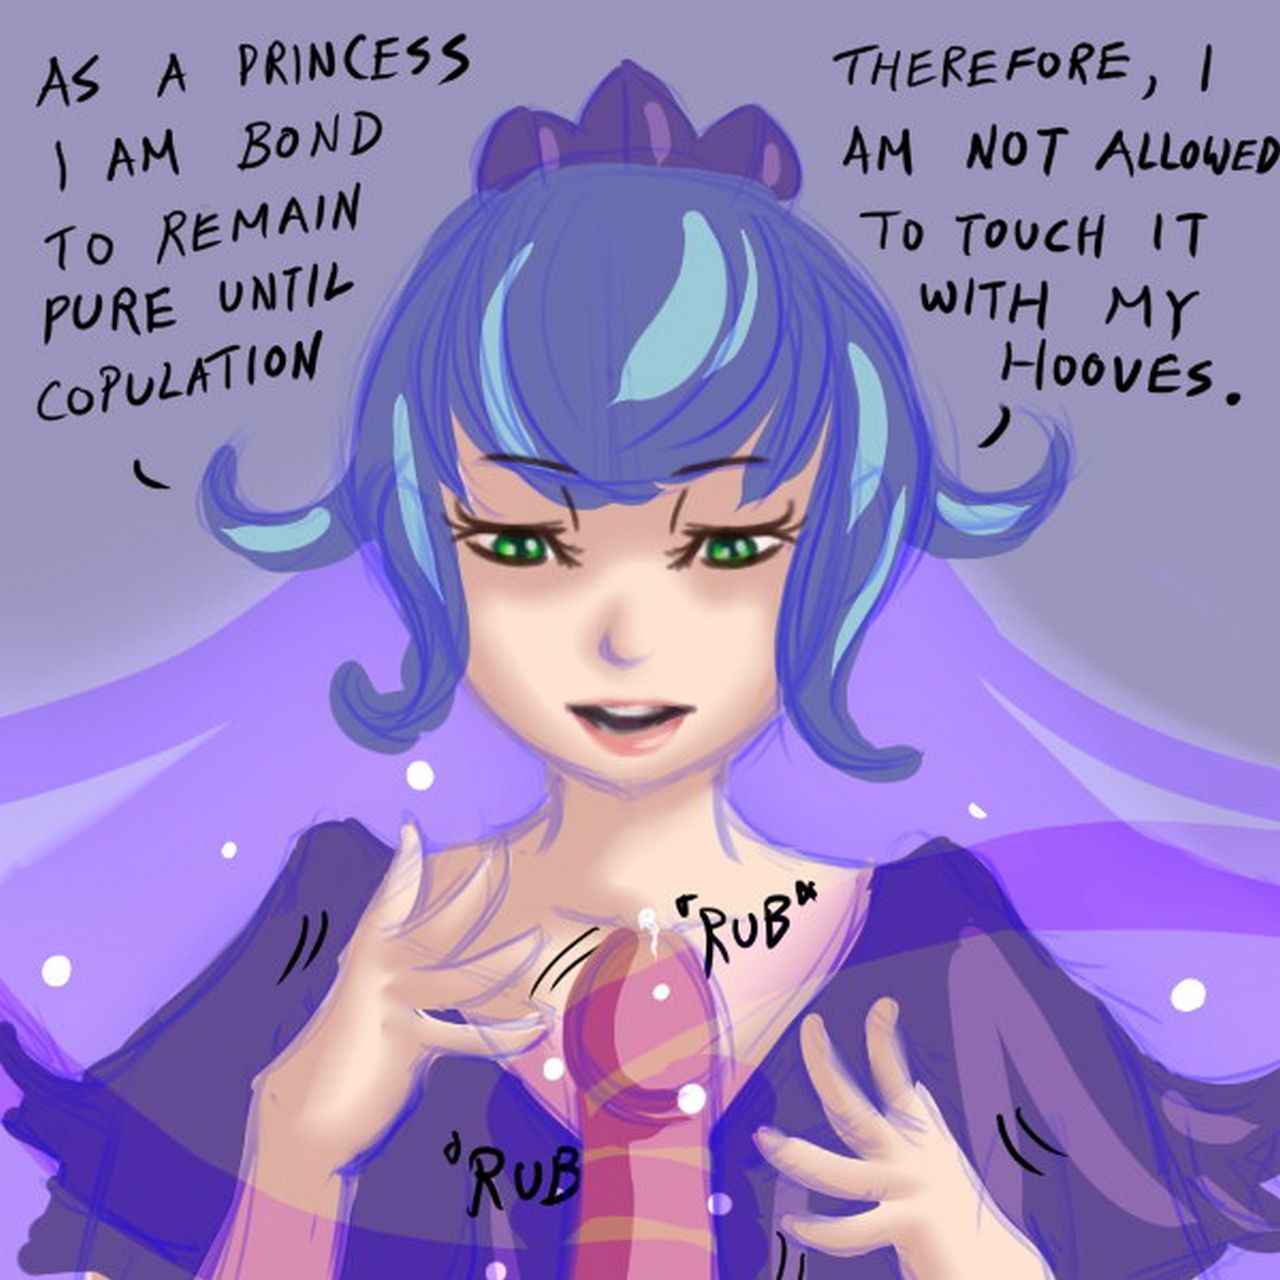 Prenses Luna pov page 1